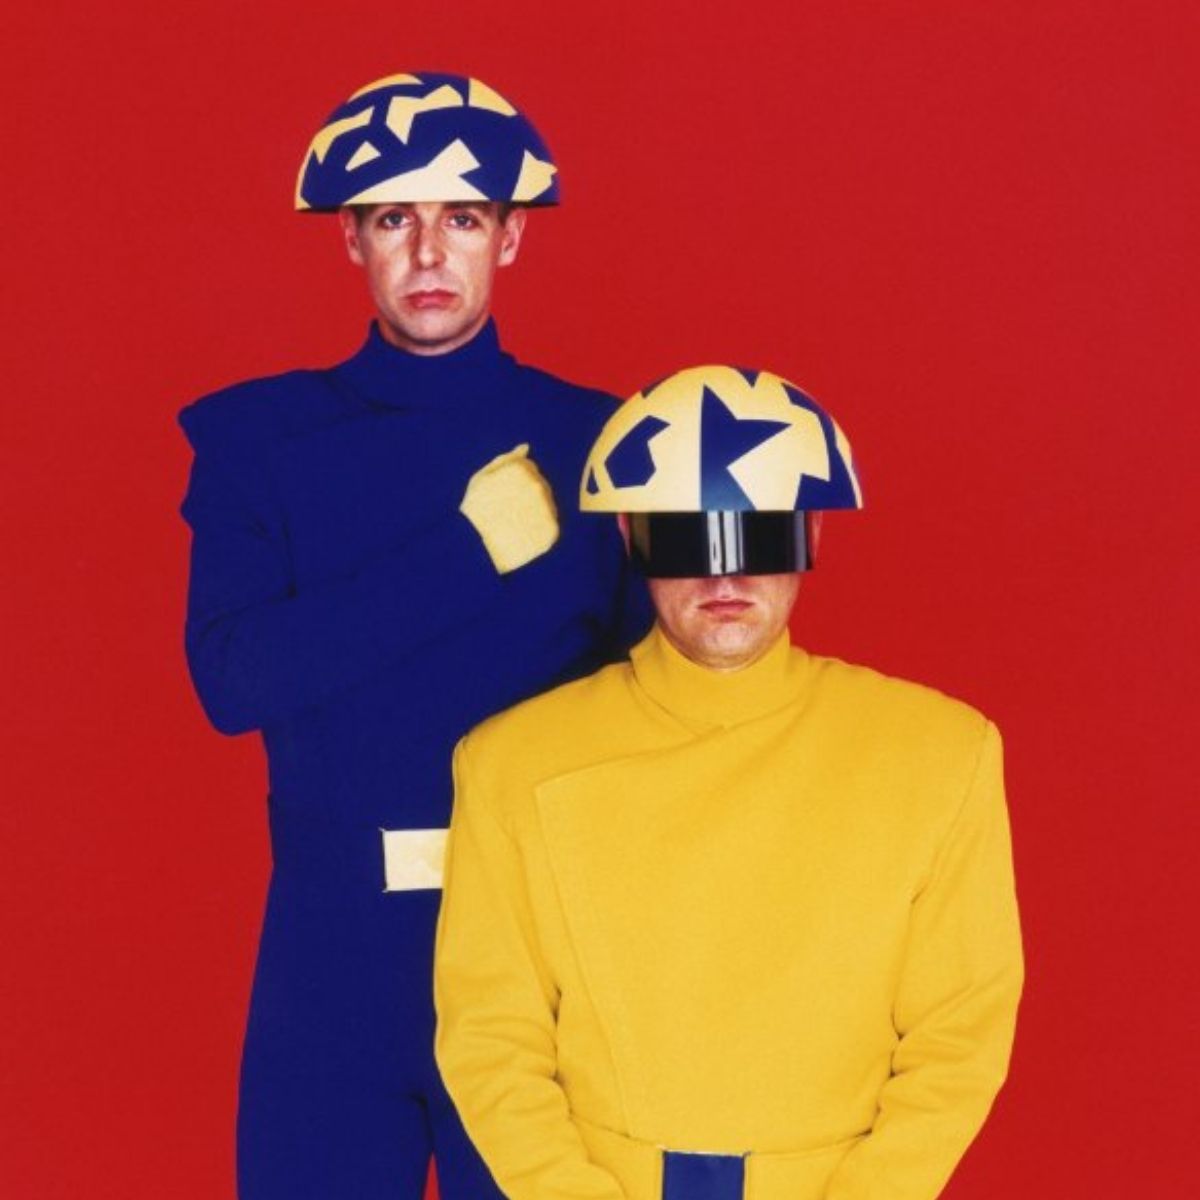 Cover for "Go West" single "Pet Shop Boys" 